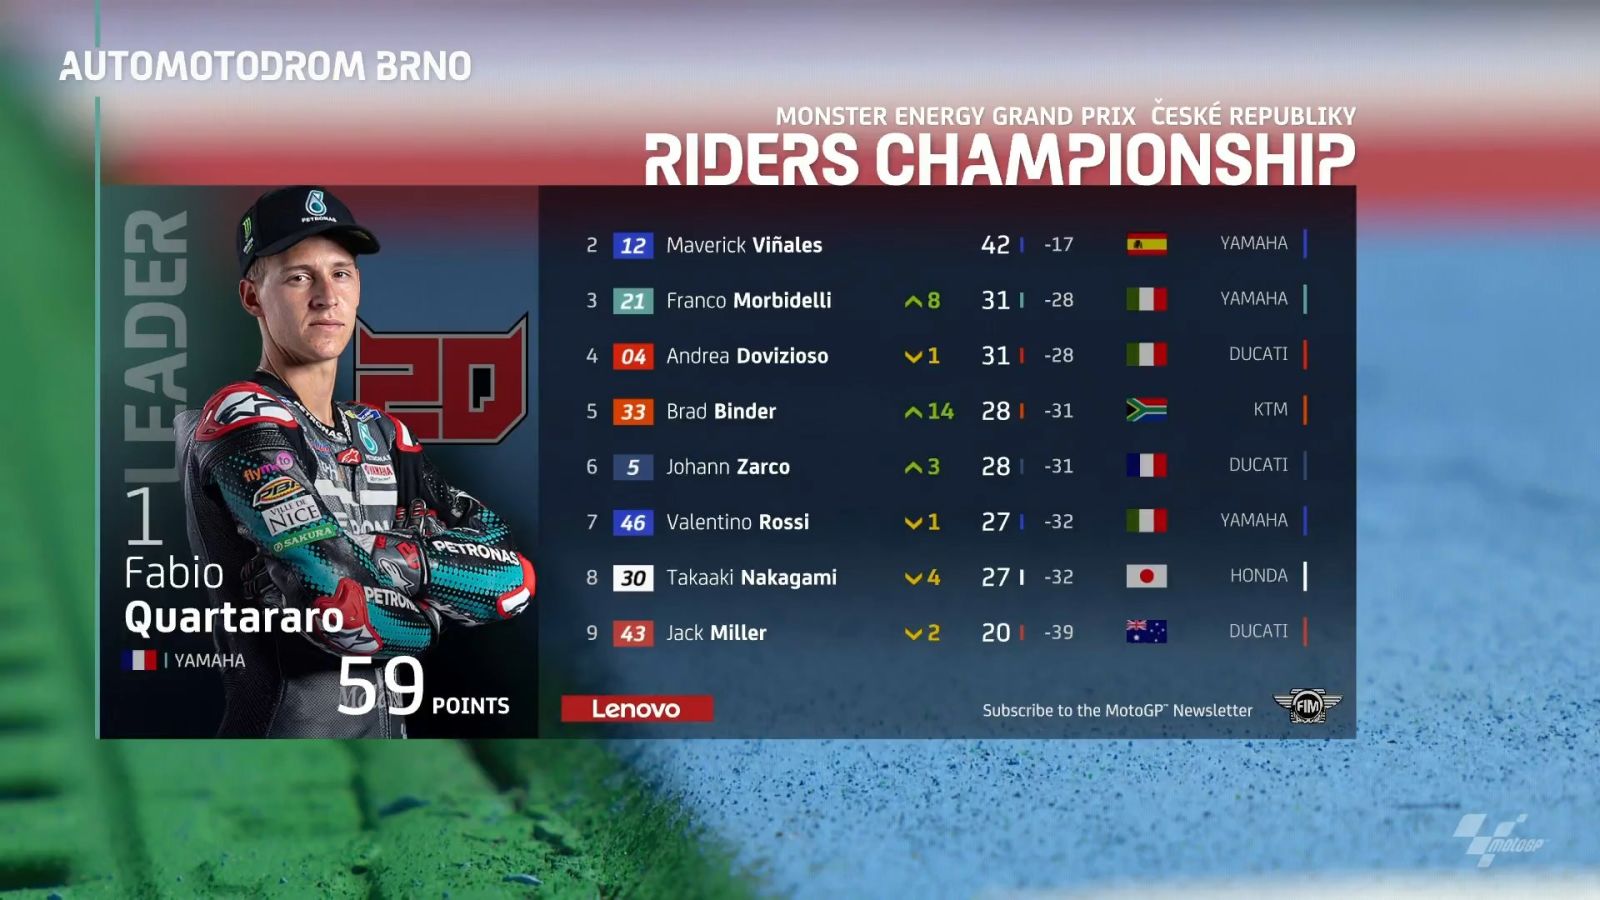 Riders Championship 2020 after Brno